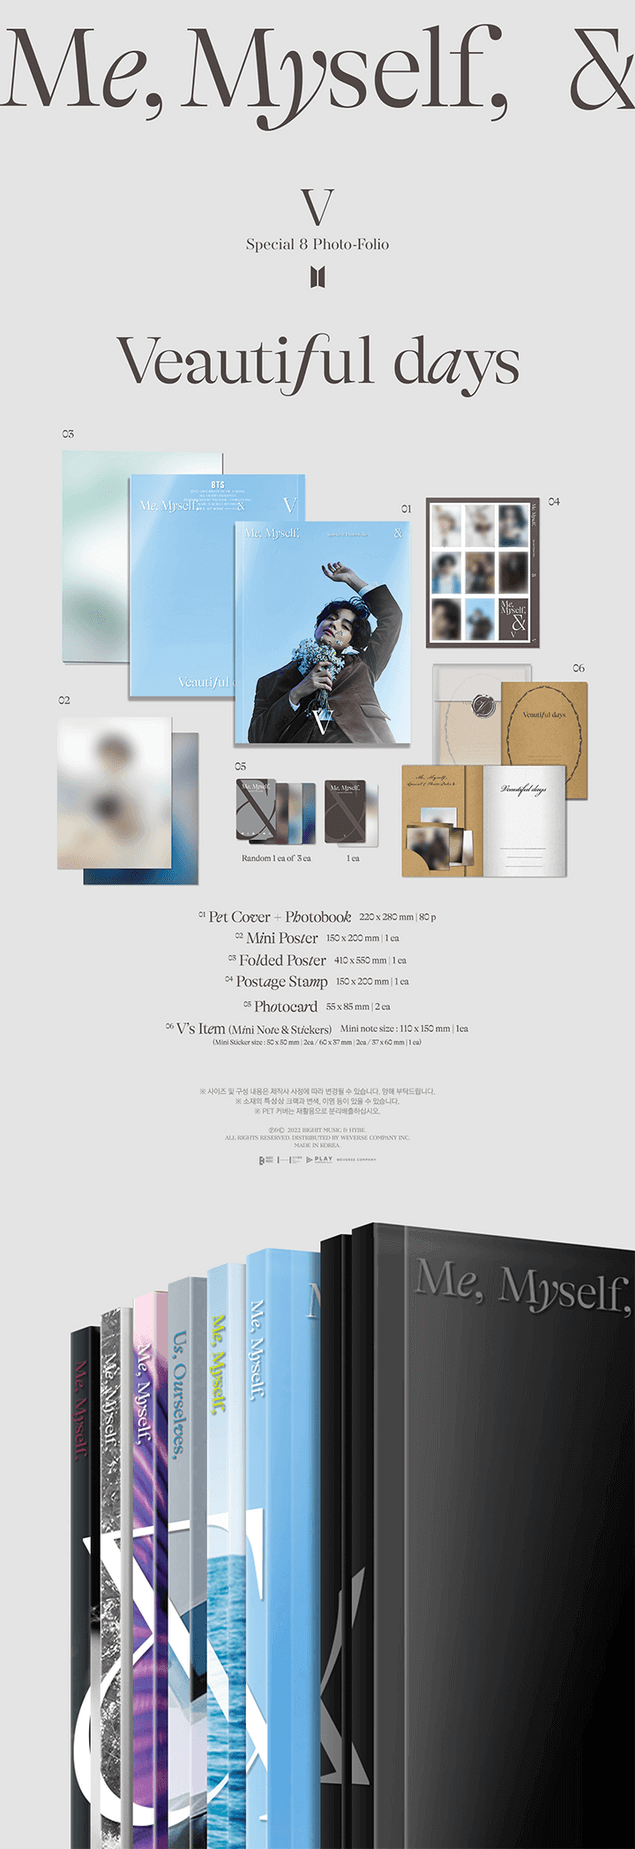 Special 8 Photo-Folio Me, Myself, and V (‘Veautiful Days’) | The Daebak Company